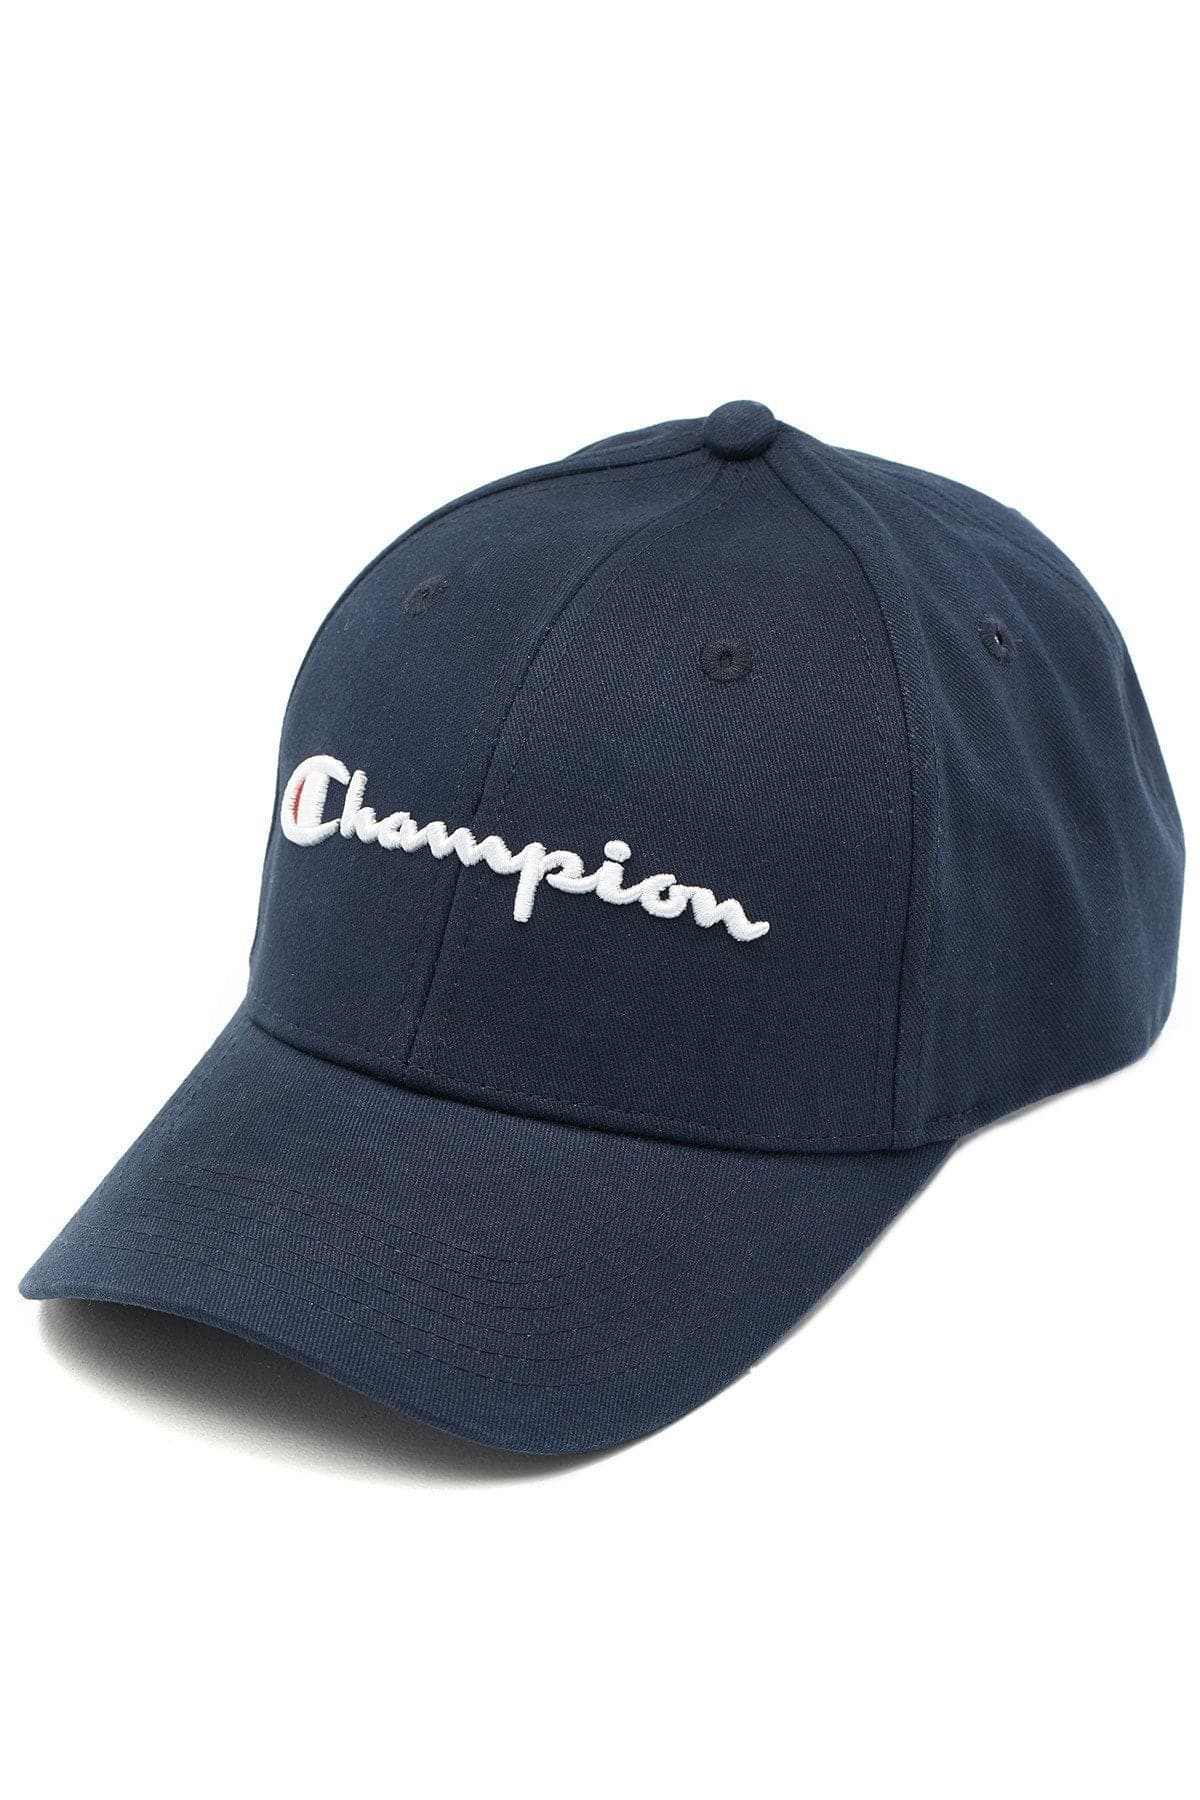 champion headwear